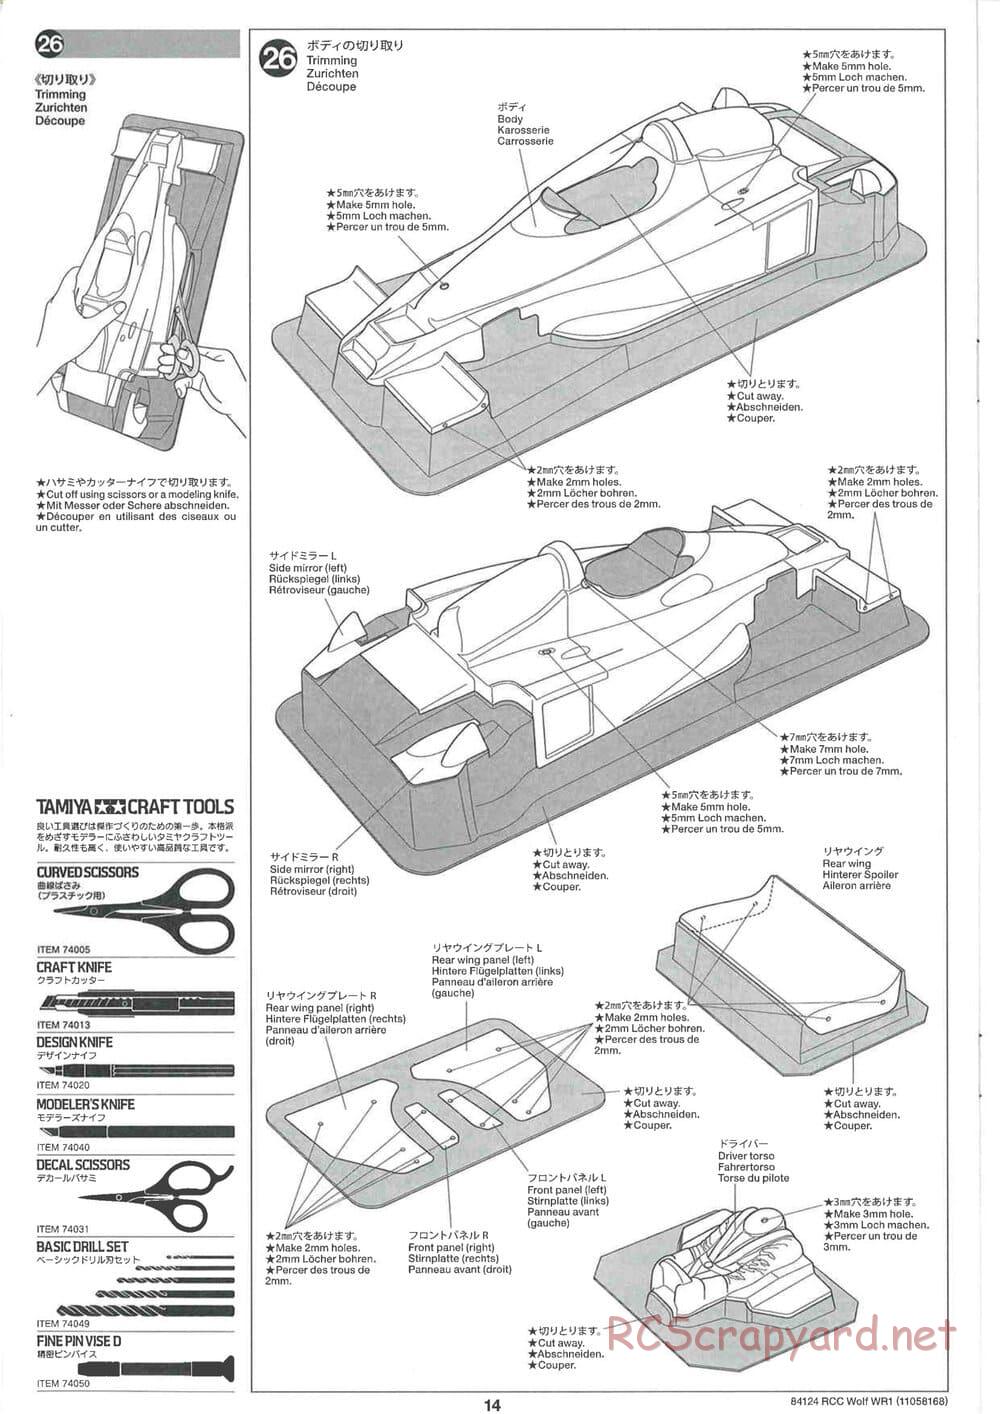 Tamiya - Wolf WR1 - F104W Chassis - Manual - Page 14